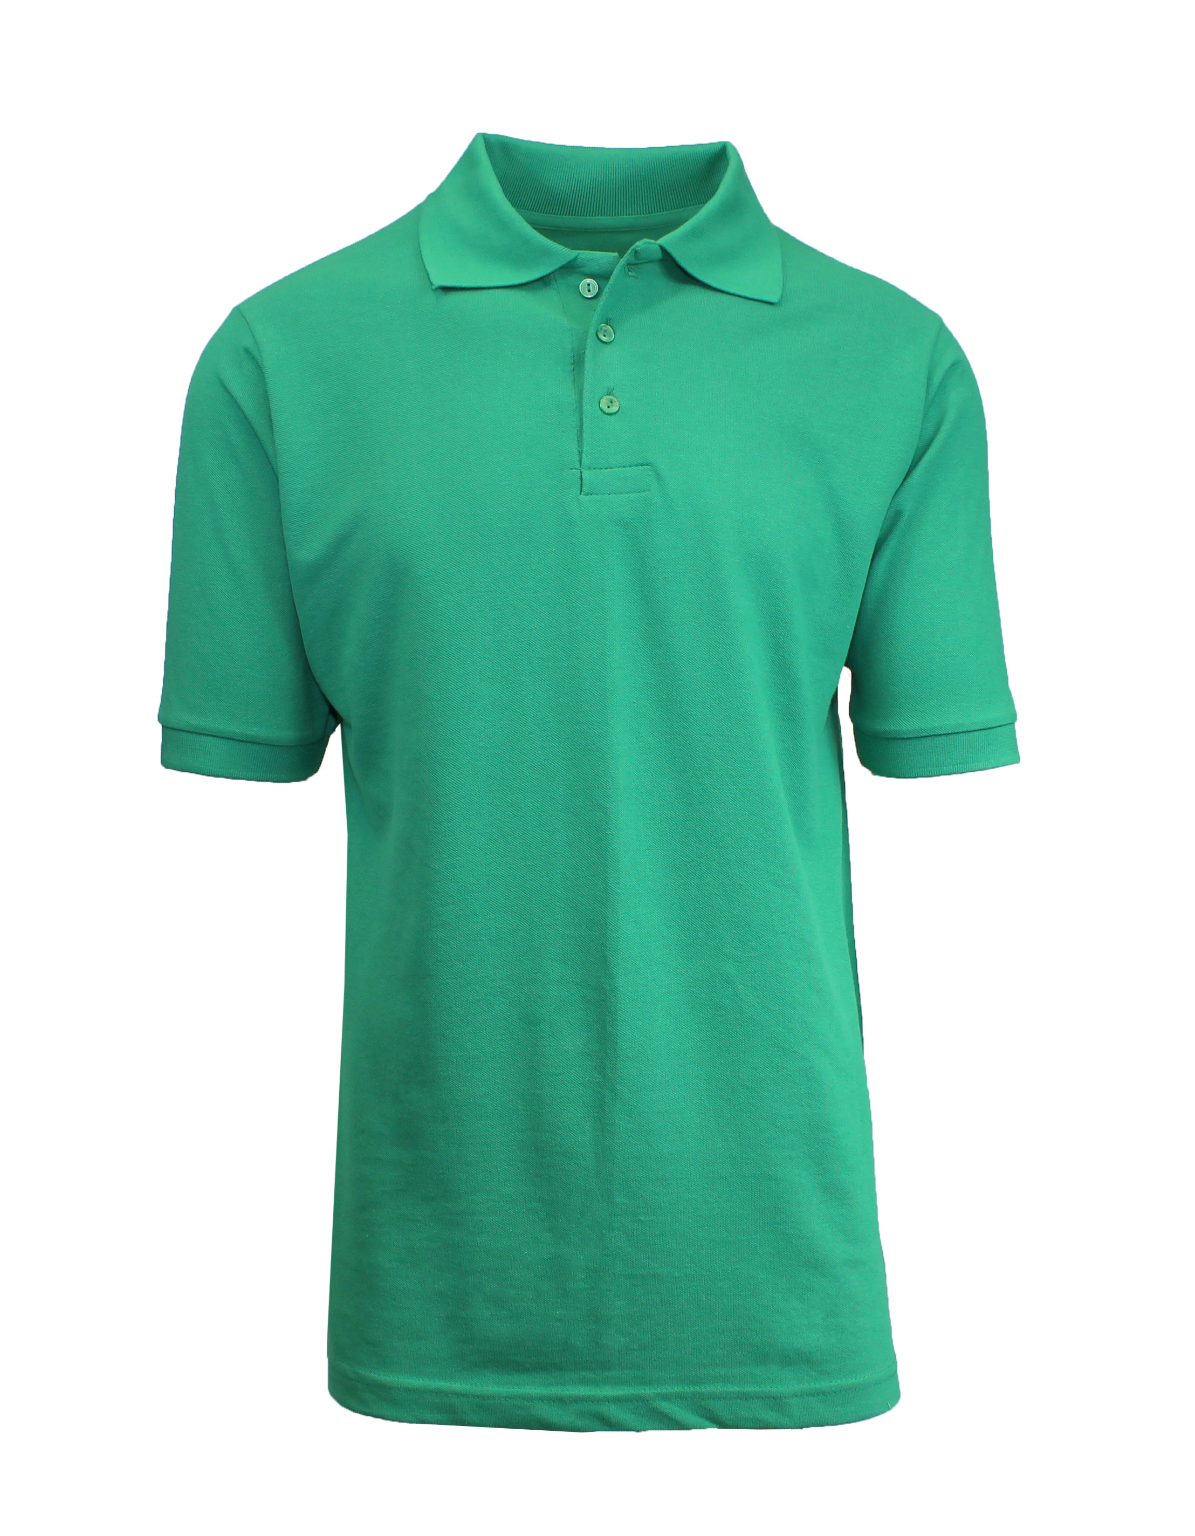 Wholesale Boys' Uniform Polo Shirts - Green, Size 5 - DollarDays